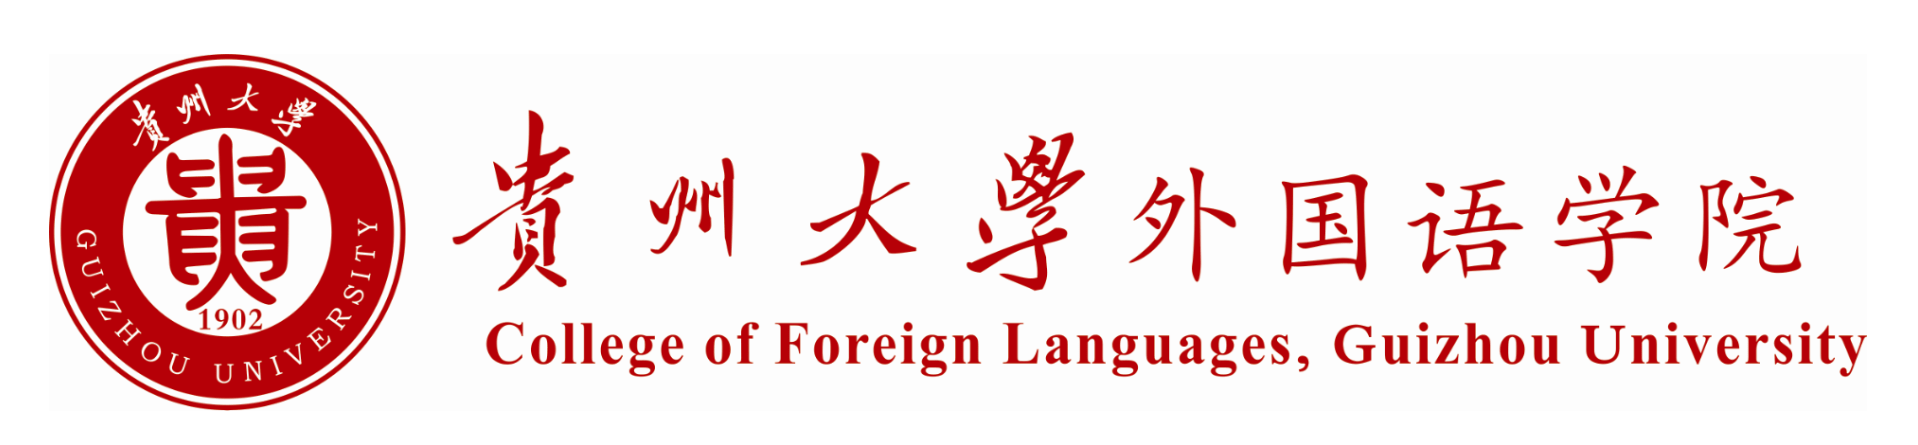 logo of fl